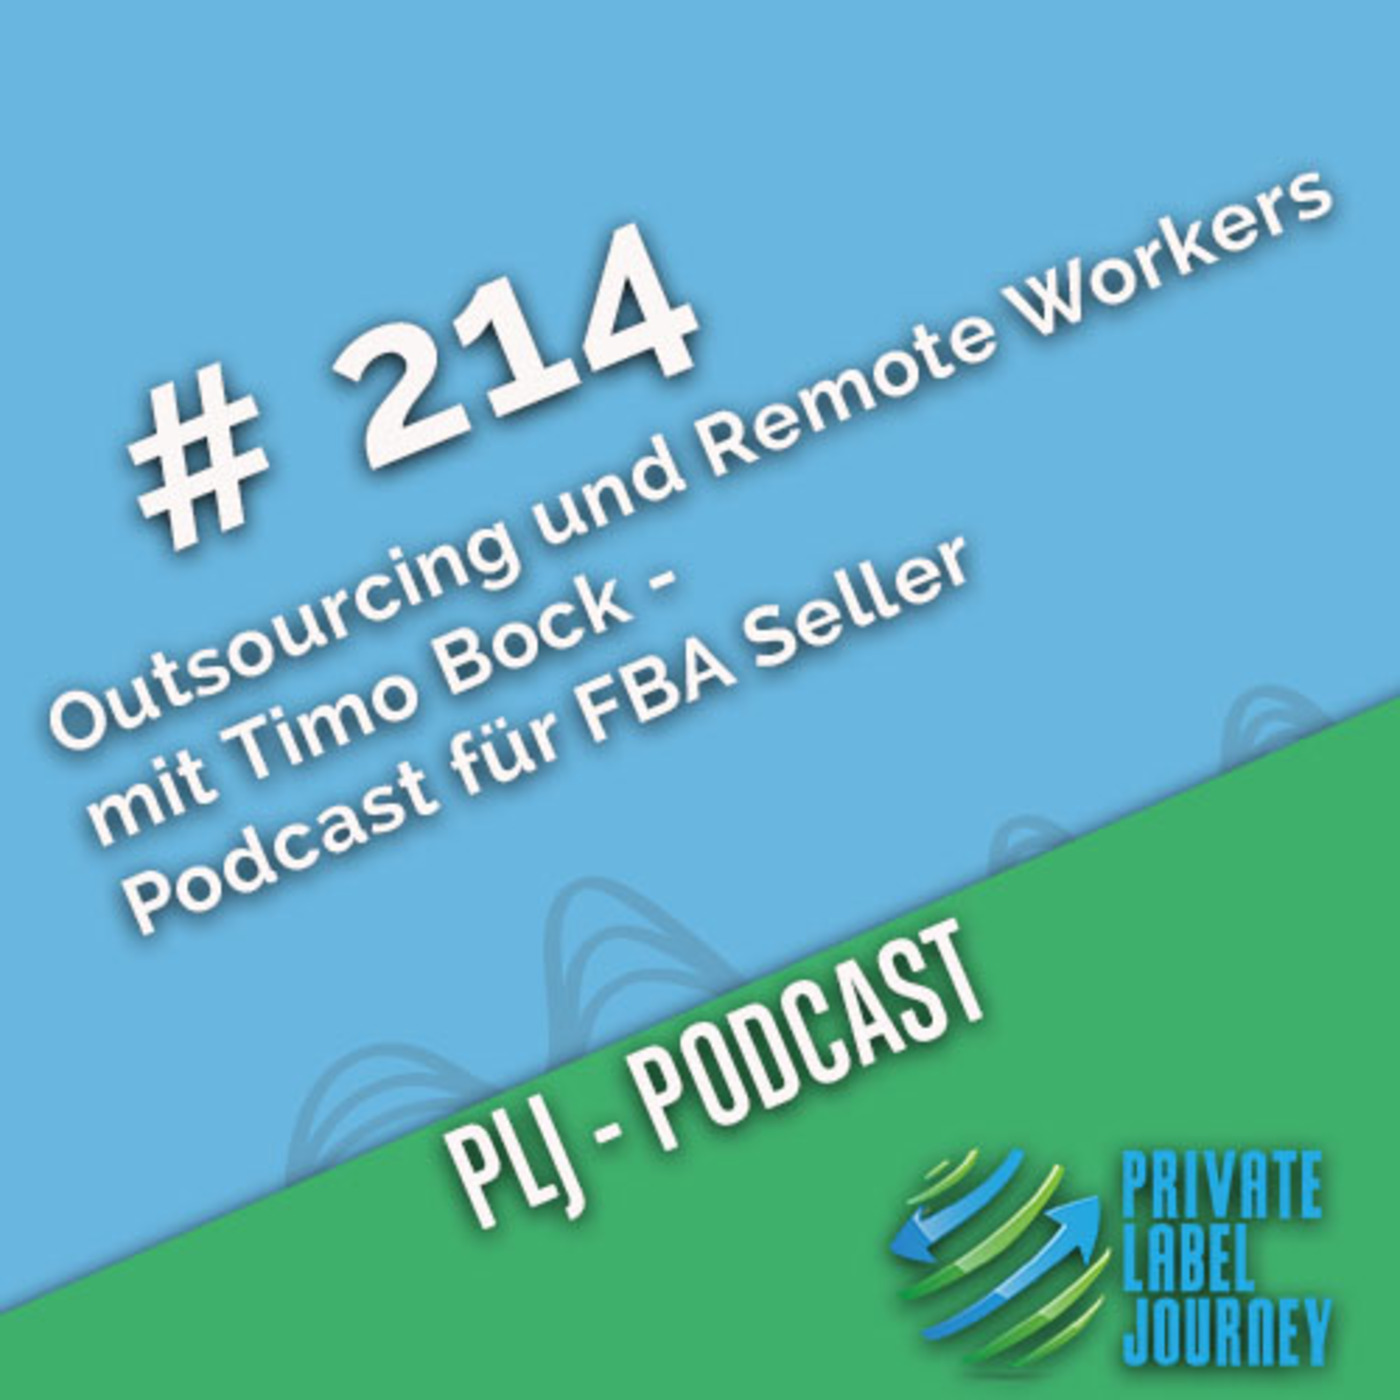 Outsourcing und Remote Workers mit Timo Bock - Podcast für FBA Seller